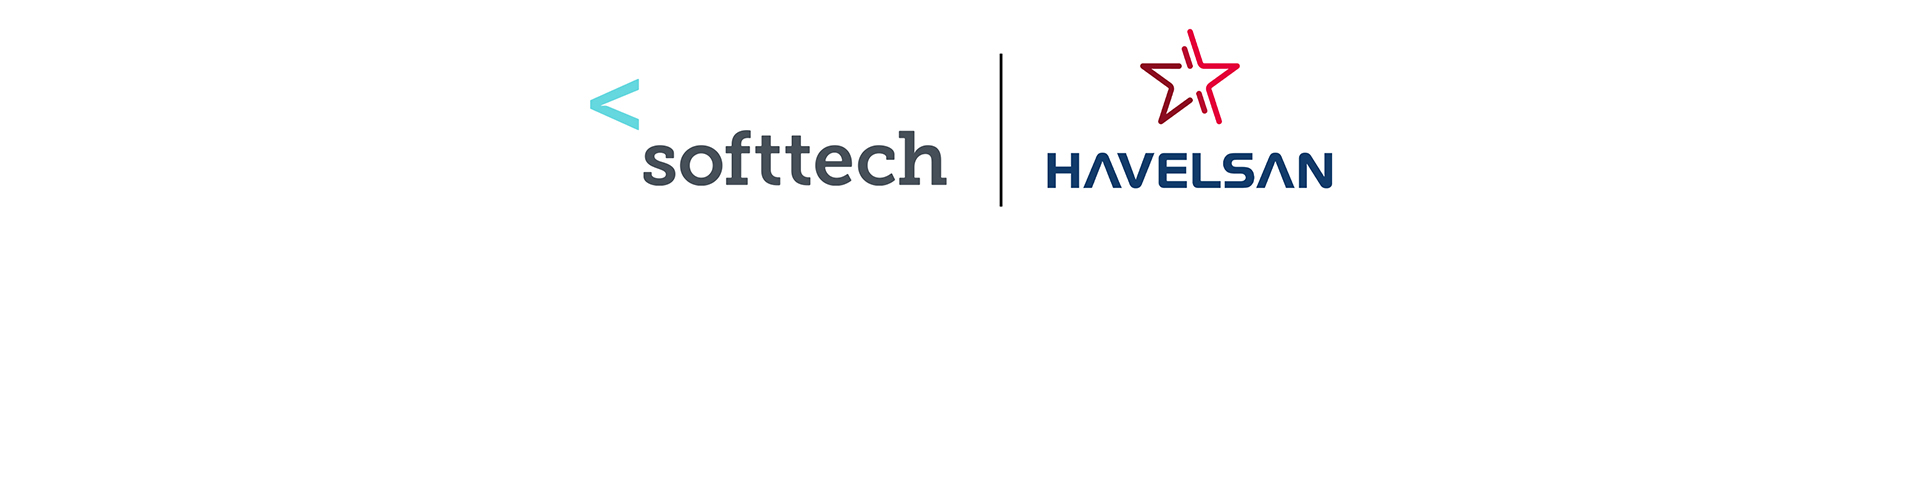 Strategic Partnership Agreement Between Havelsan and Softtech